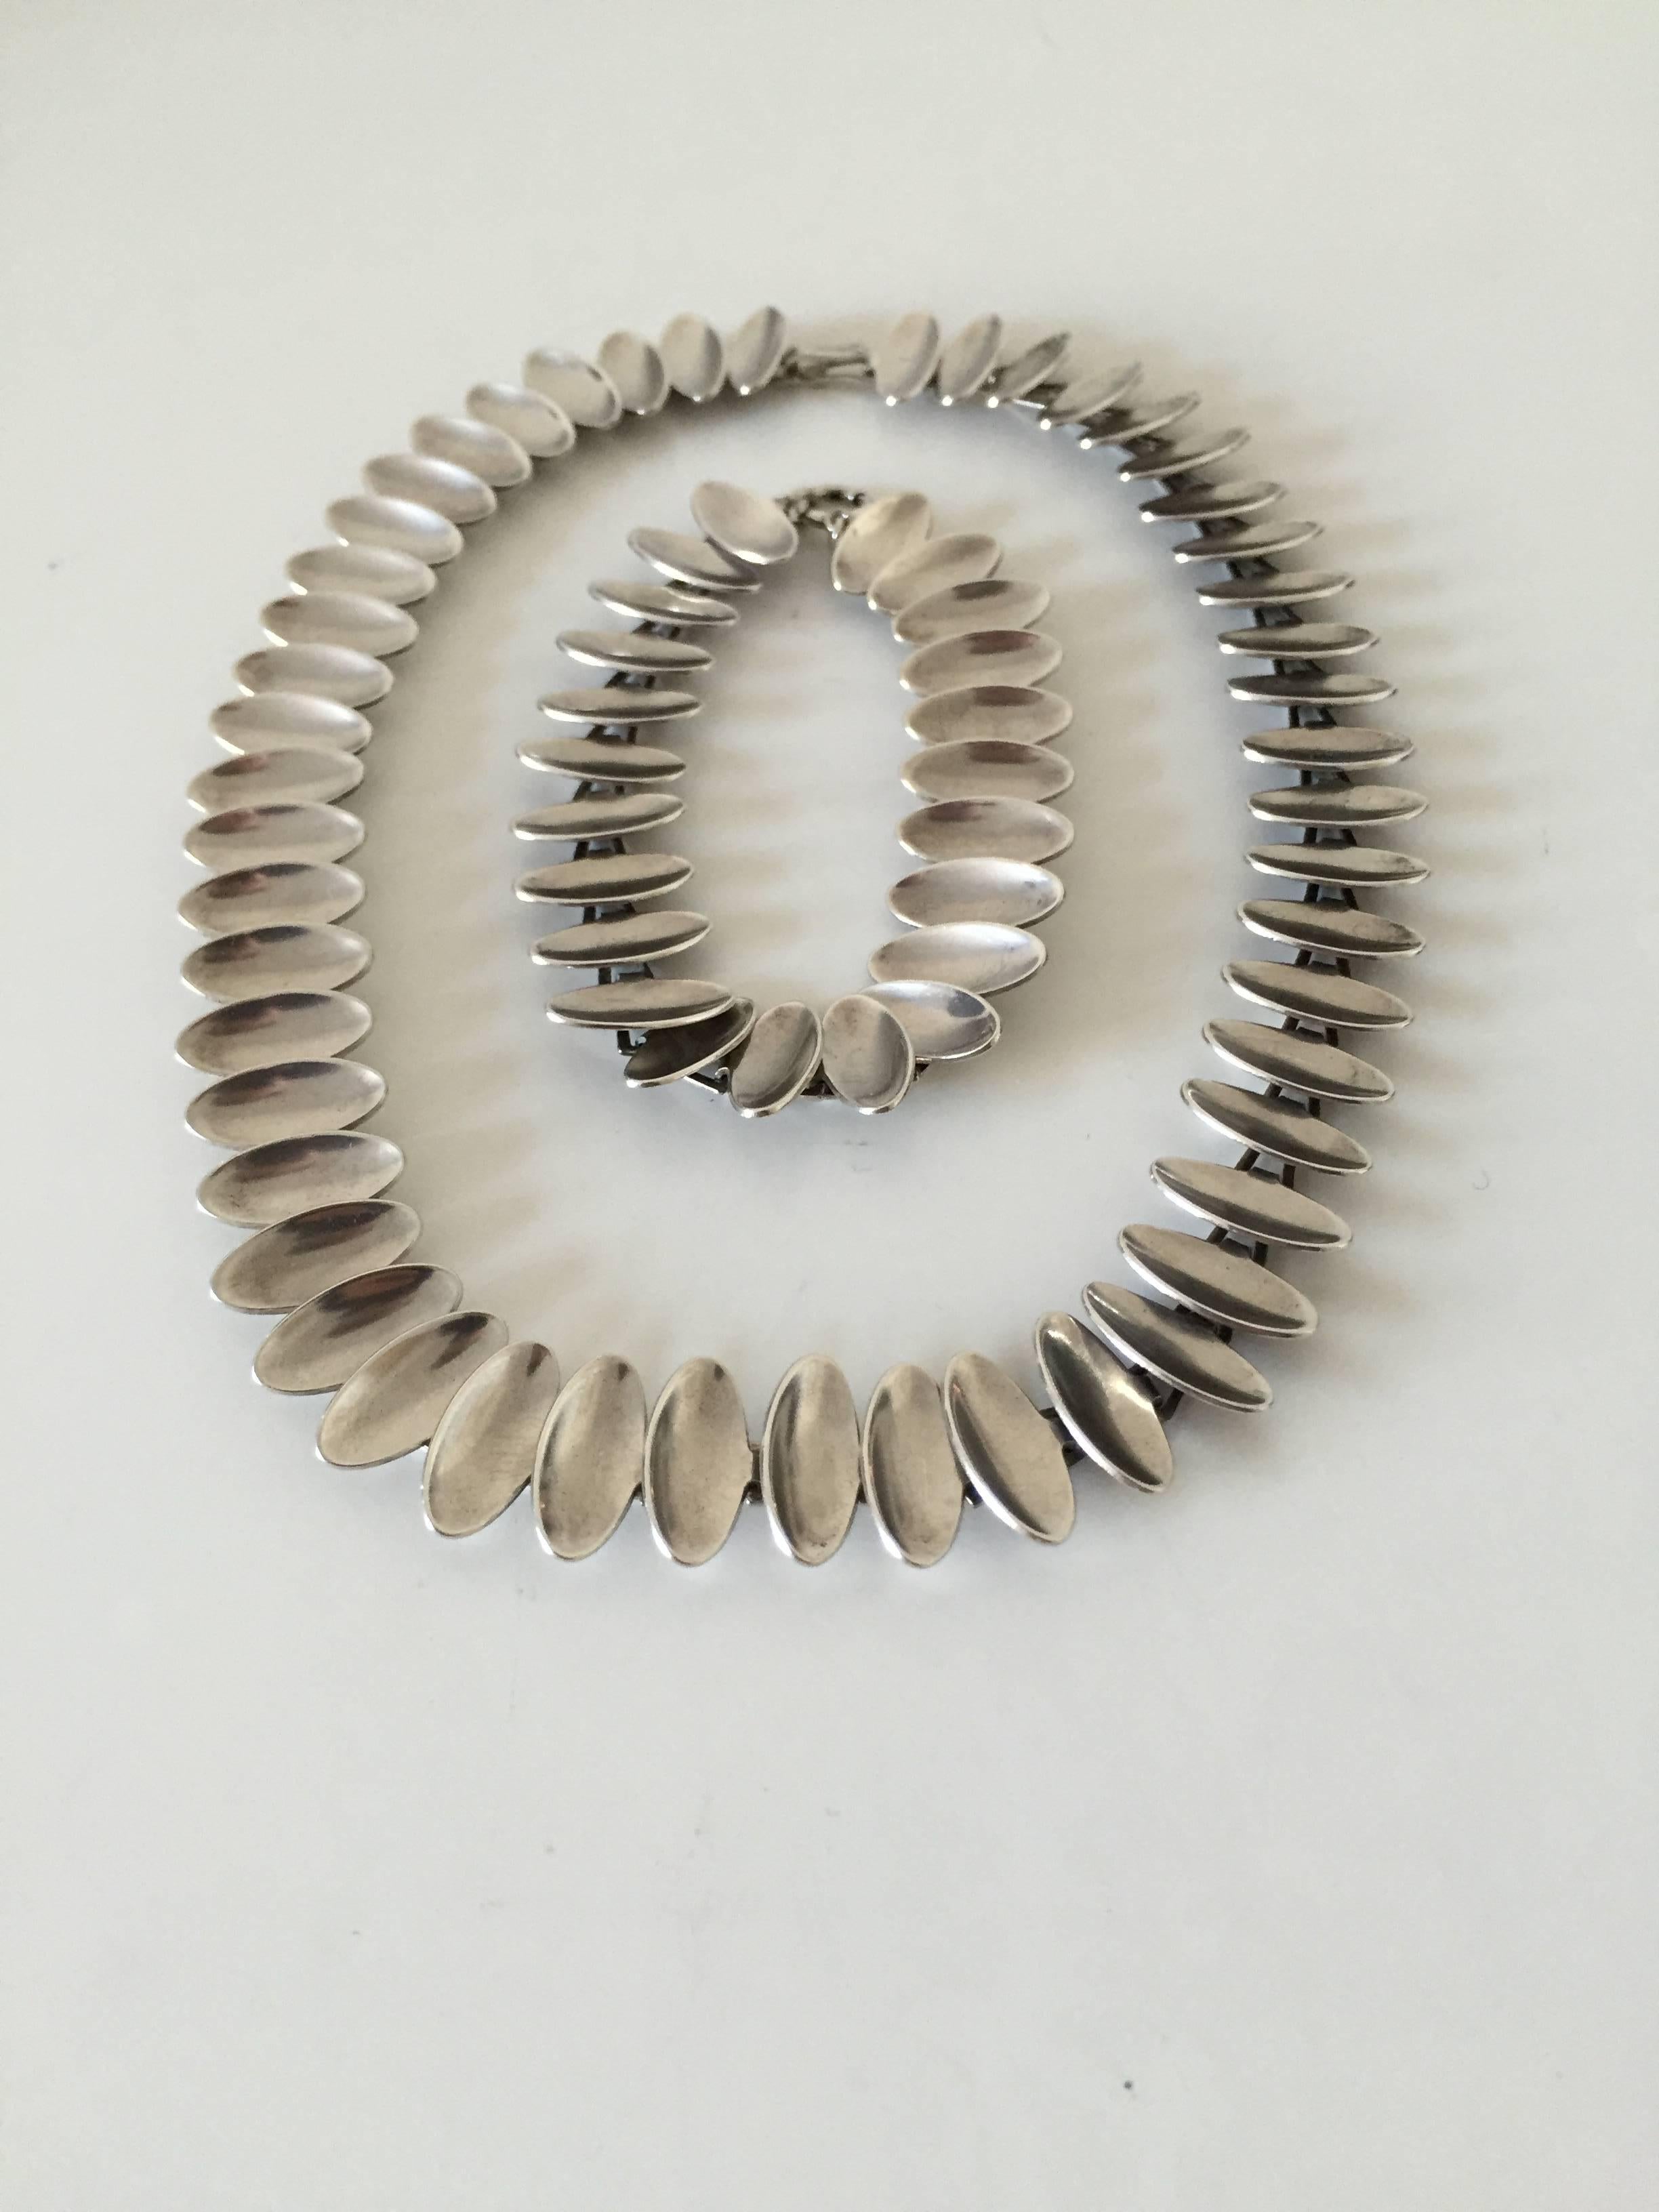 Anton Michelsen sterling silver necklace and bracelet designed by Nanna Ditzel.

Measures 19 cm and 38 cm. Links are 1.6 cm wide.
Bracelet weighs 22.7 g / 0.79 oz. Necklace weighs 50.3 g / 1.77 oz.

Nanna Ditzel (1923-2005) - Danish designer of